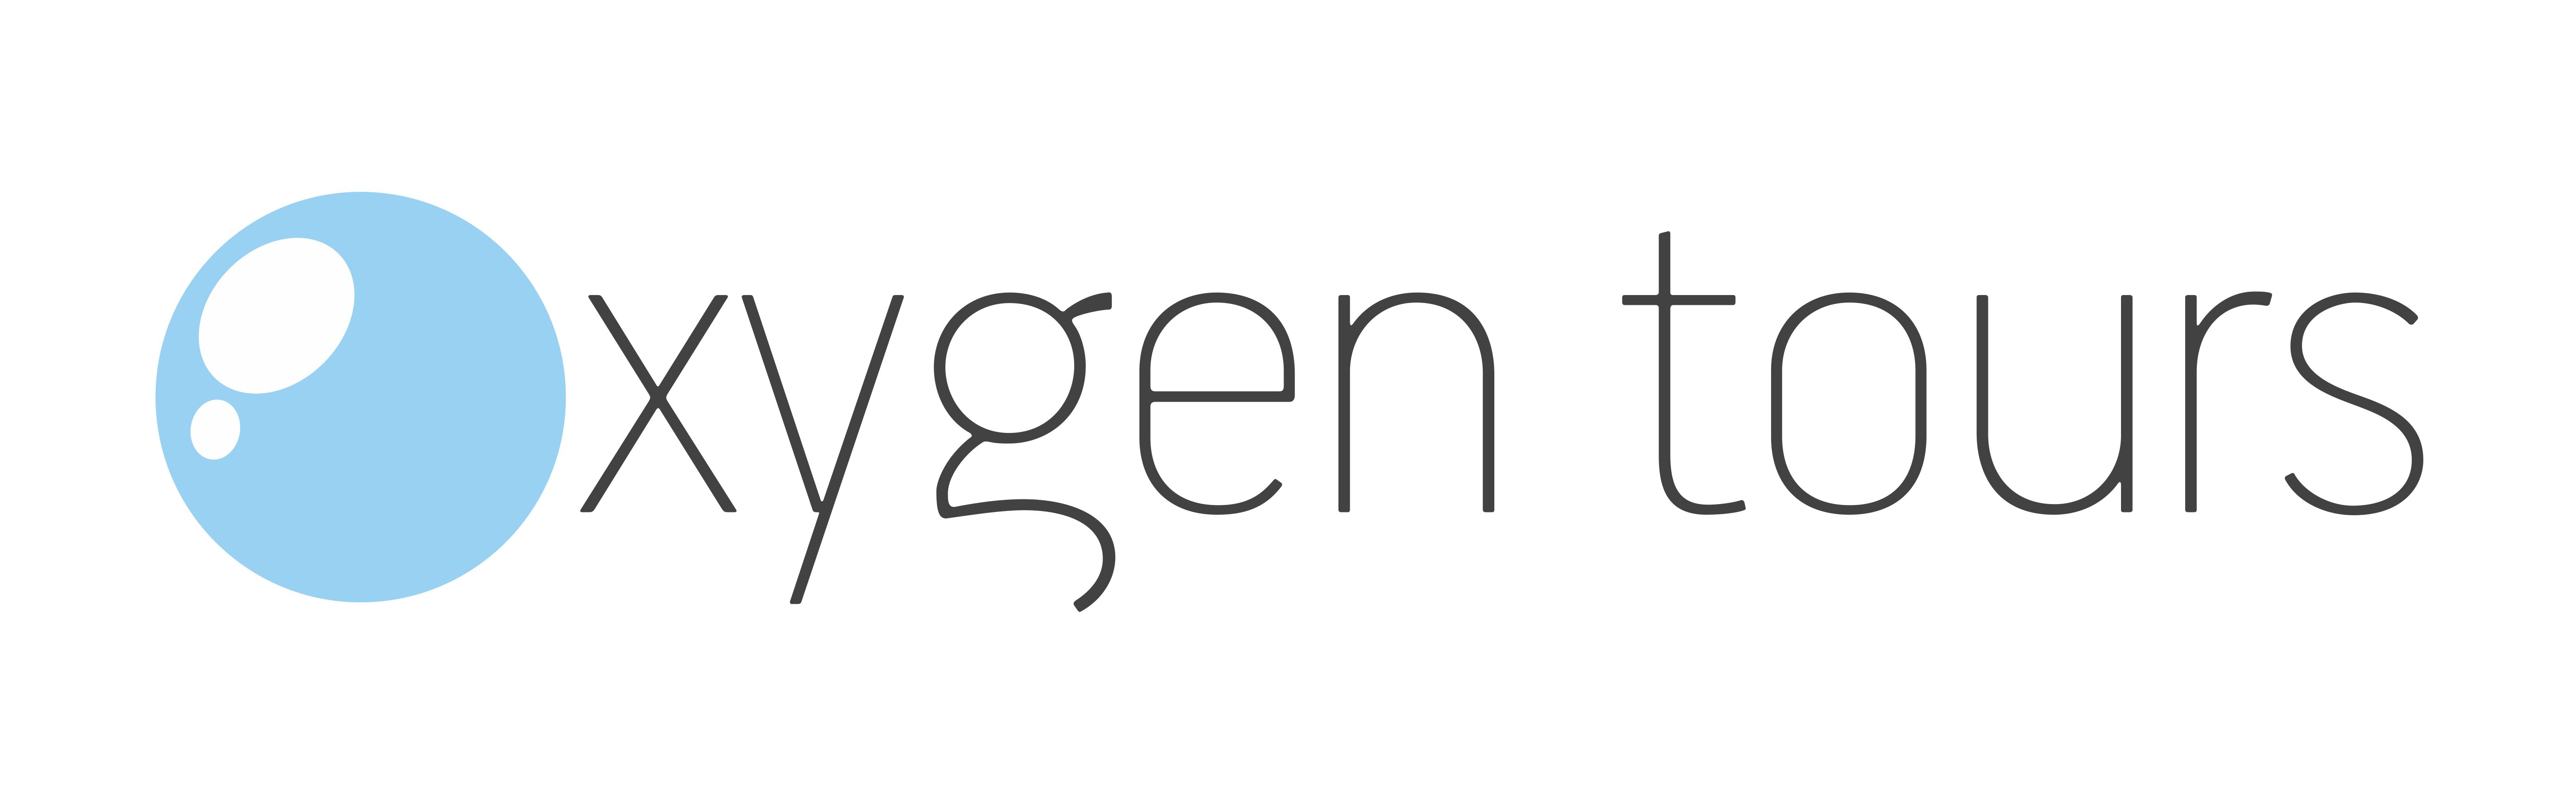 Oxygen Tours - George Melissis, Ταξιδιωτικό γραφείο